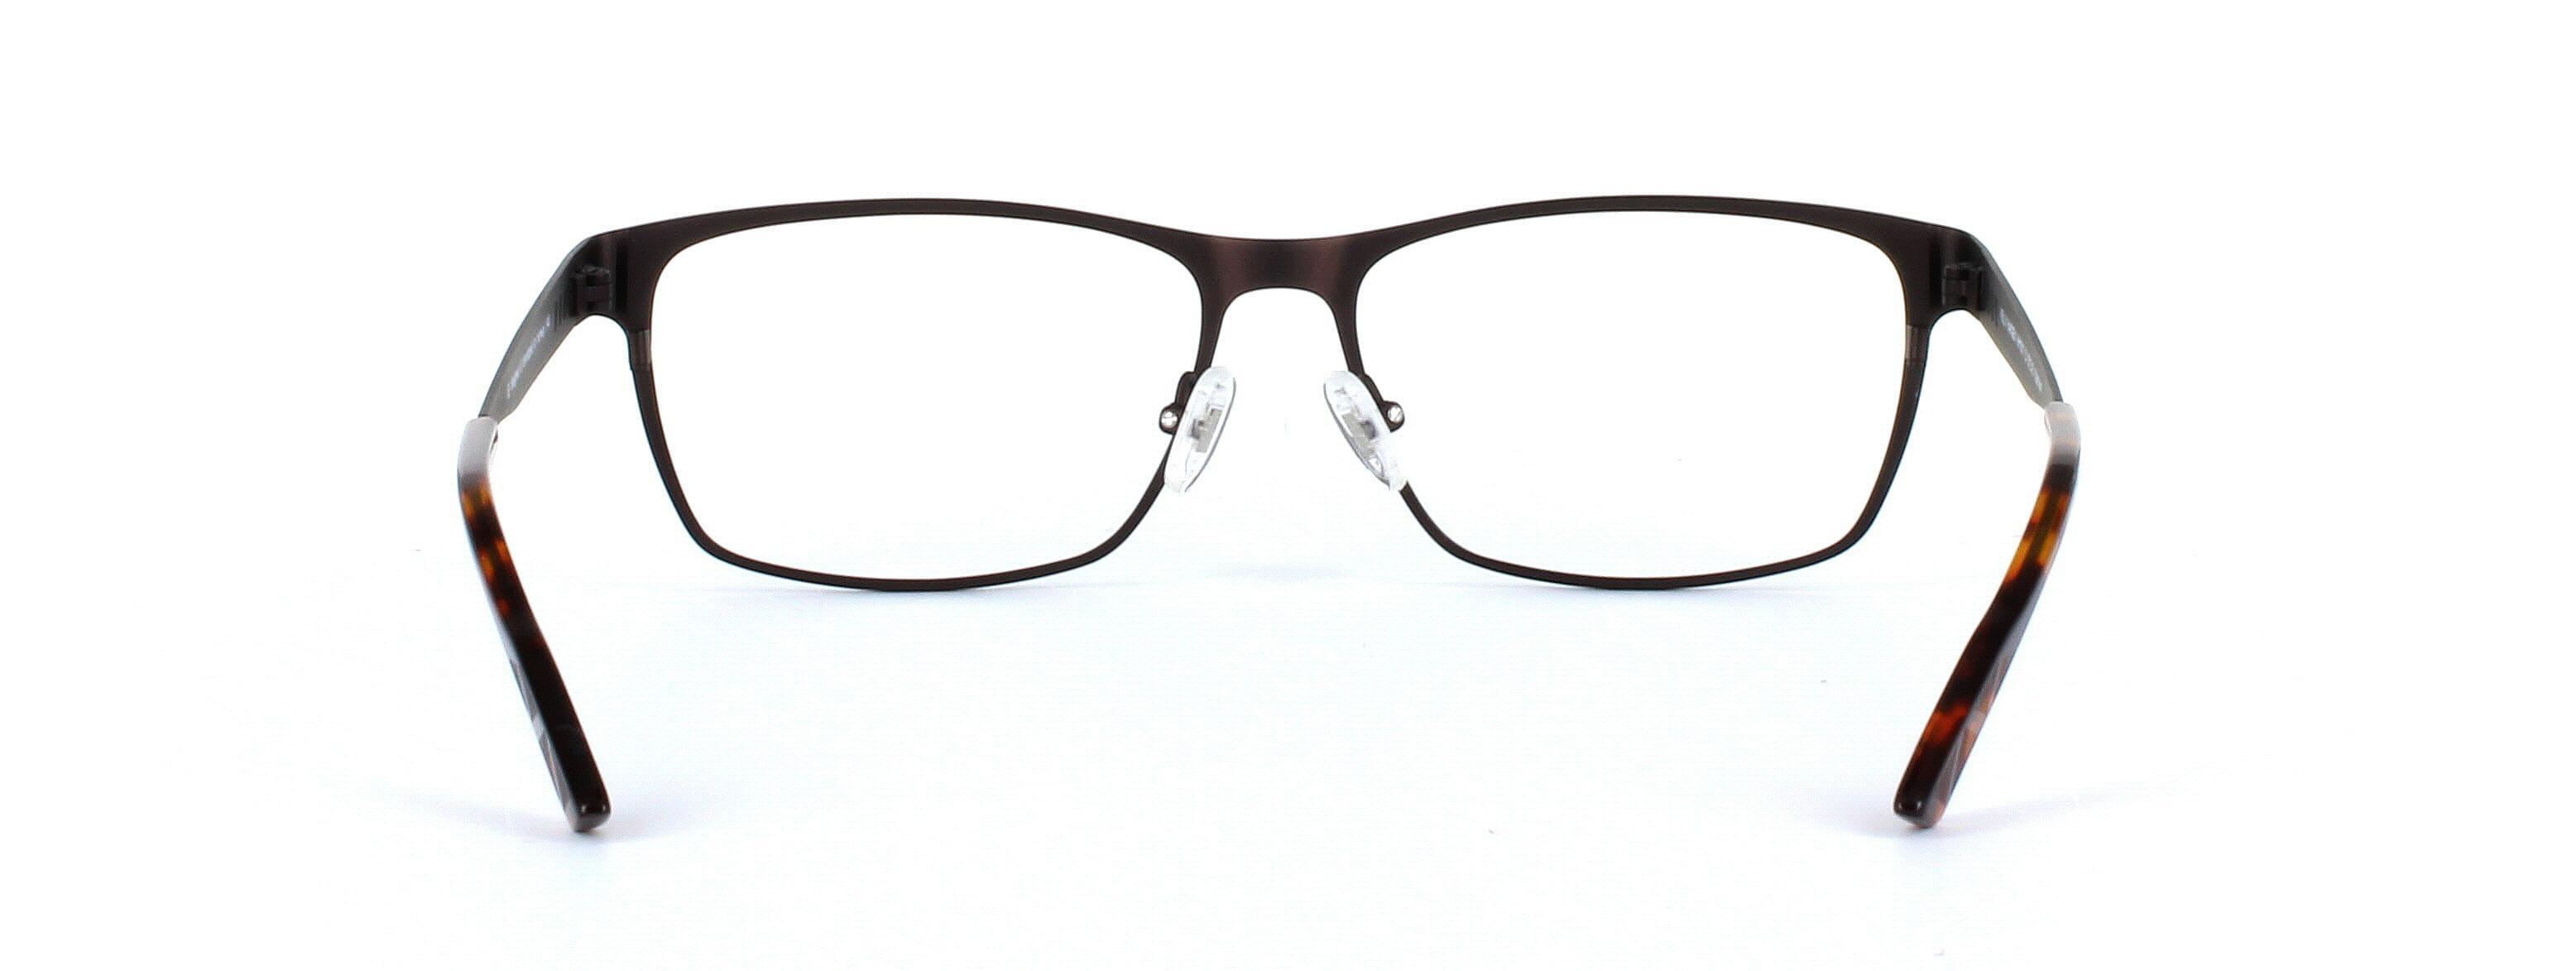 Helly Hansen HH 1017 Brown Full Rim Rectangular Metal Glasses - Image View 3